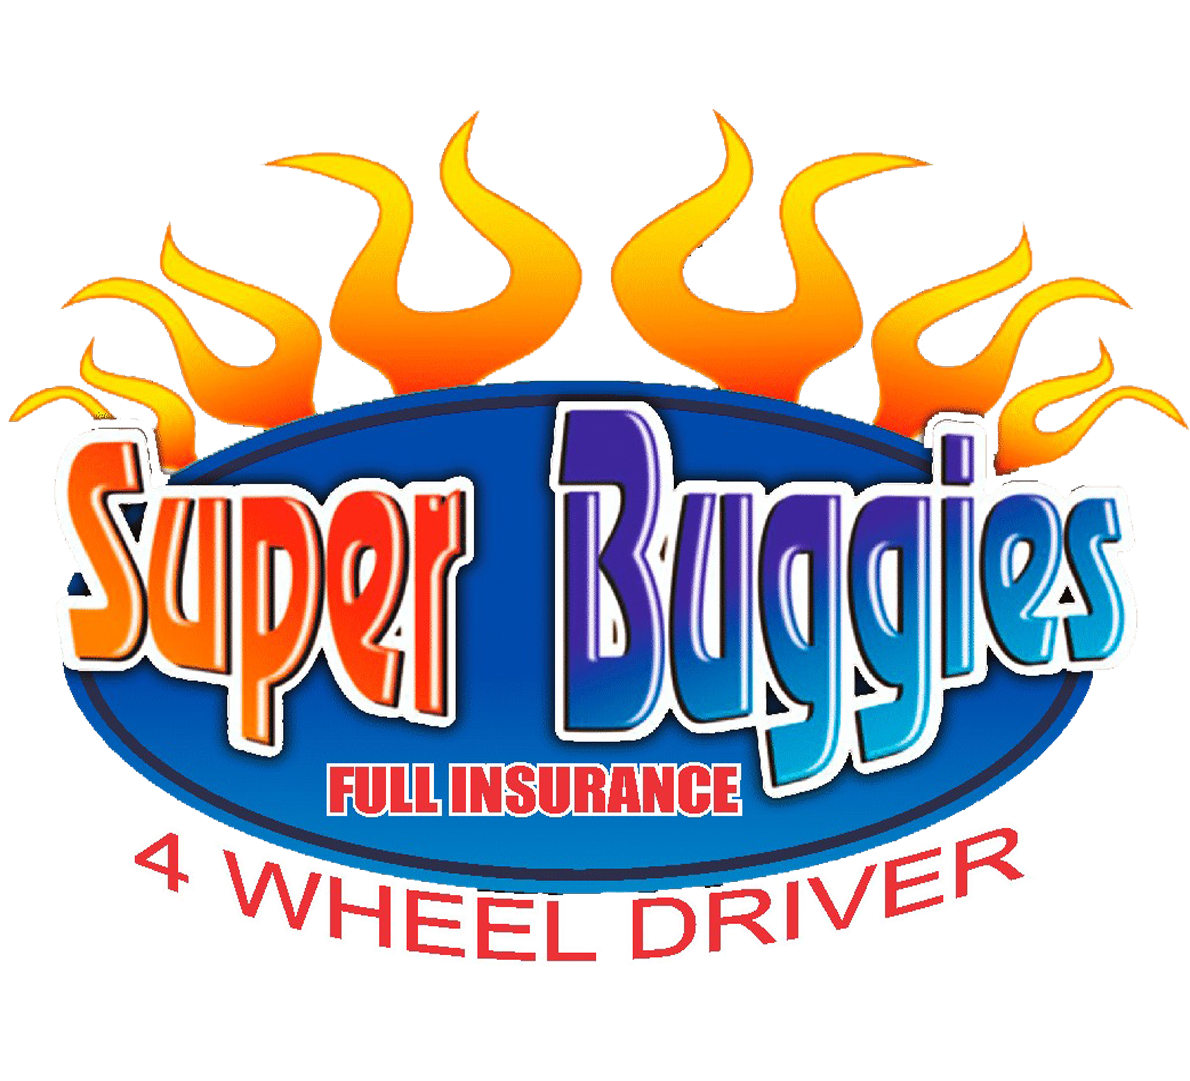 Super Buggies Puerto Plata